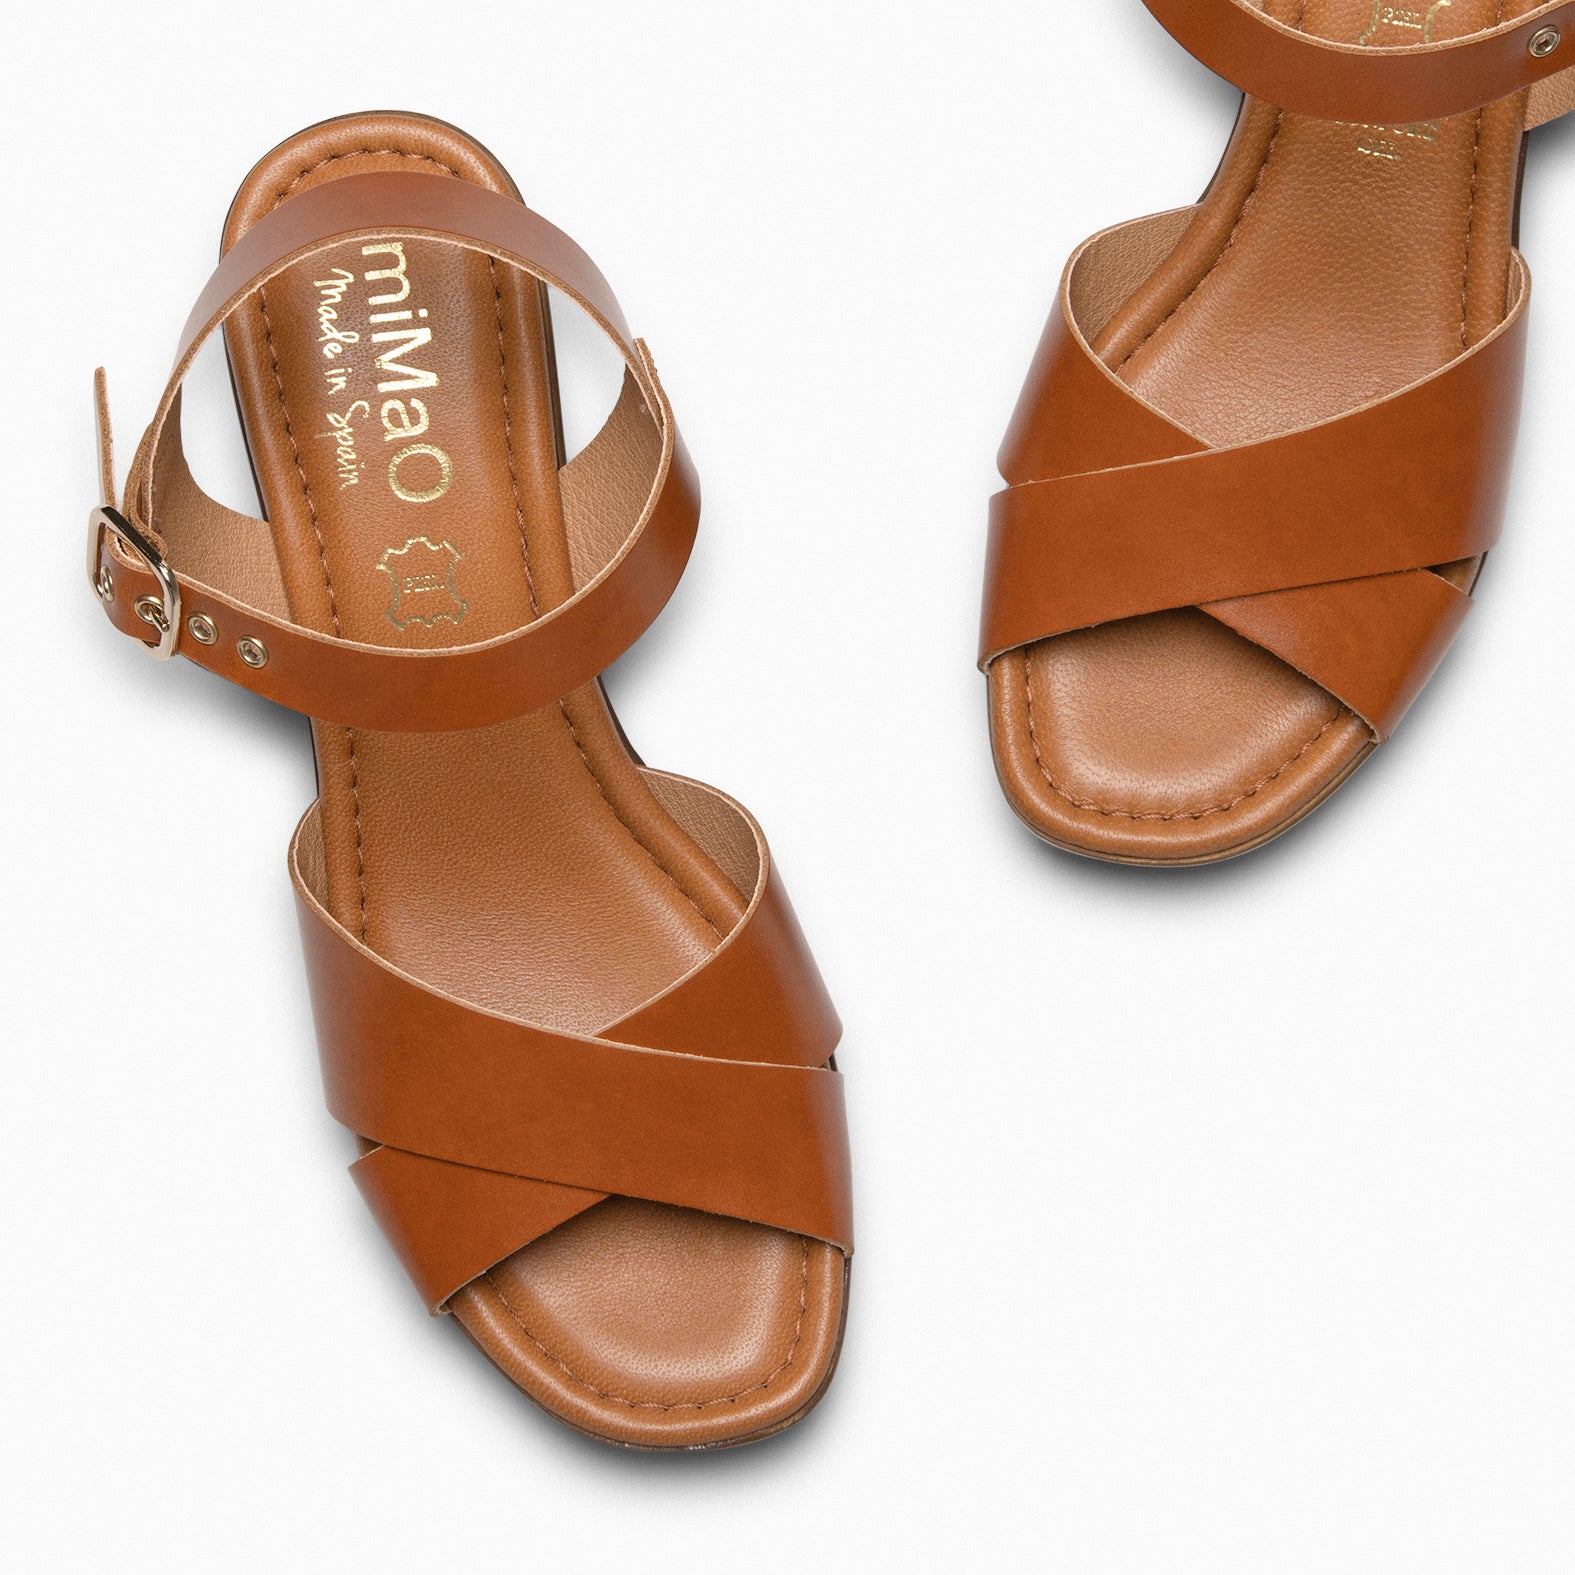 TAVIRA – CAMEL wide-heeled sandal